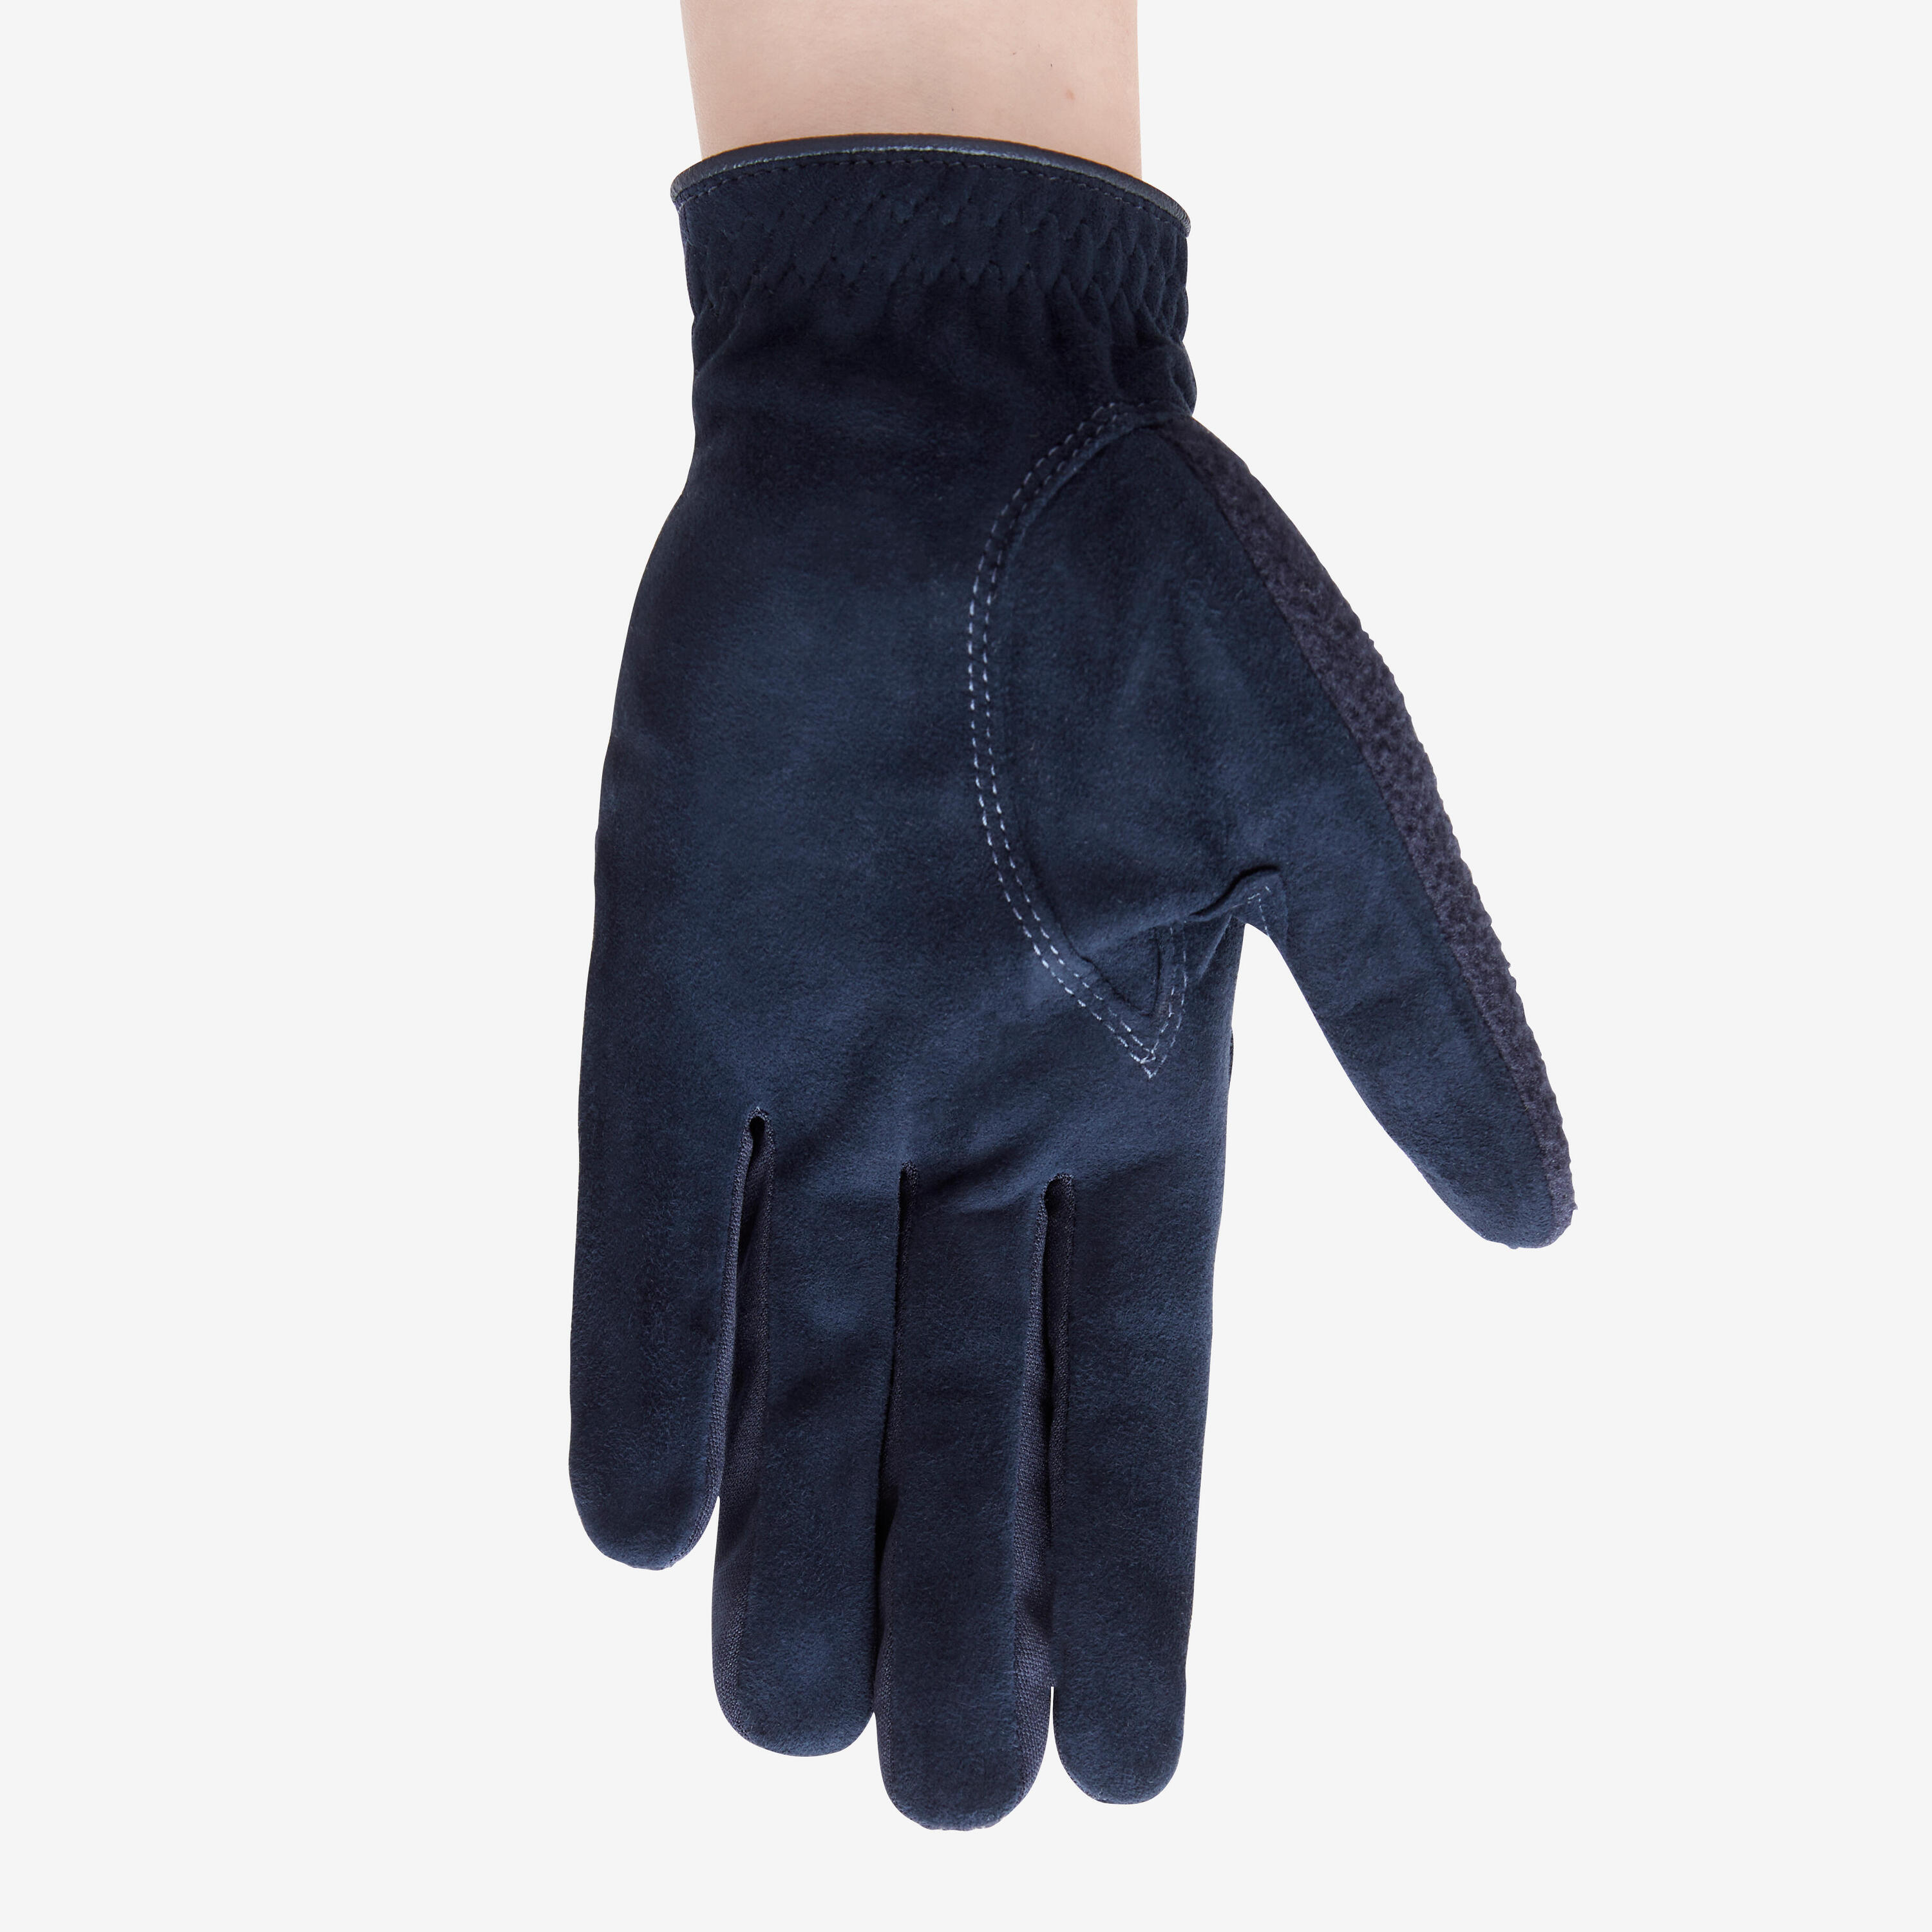 Women's golf pair of winter gloves - CW navy blue 3/5